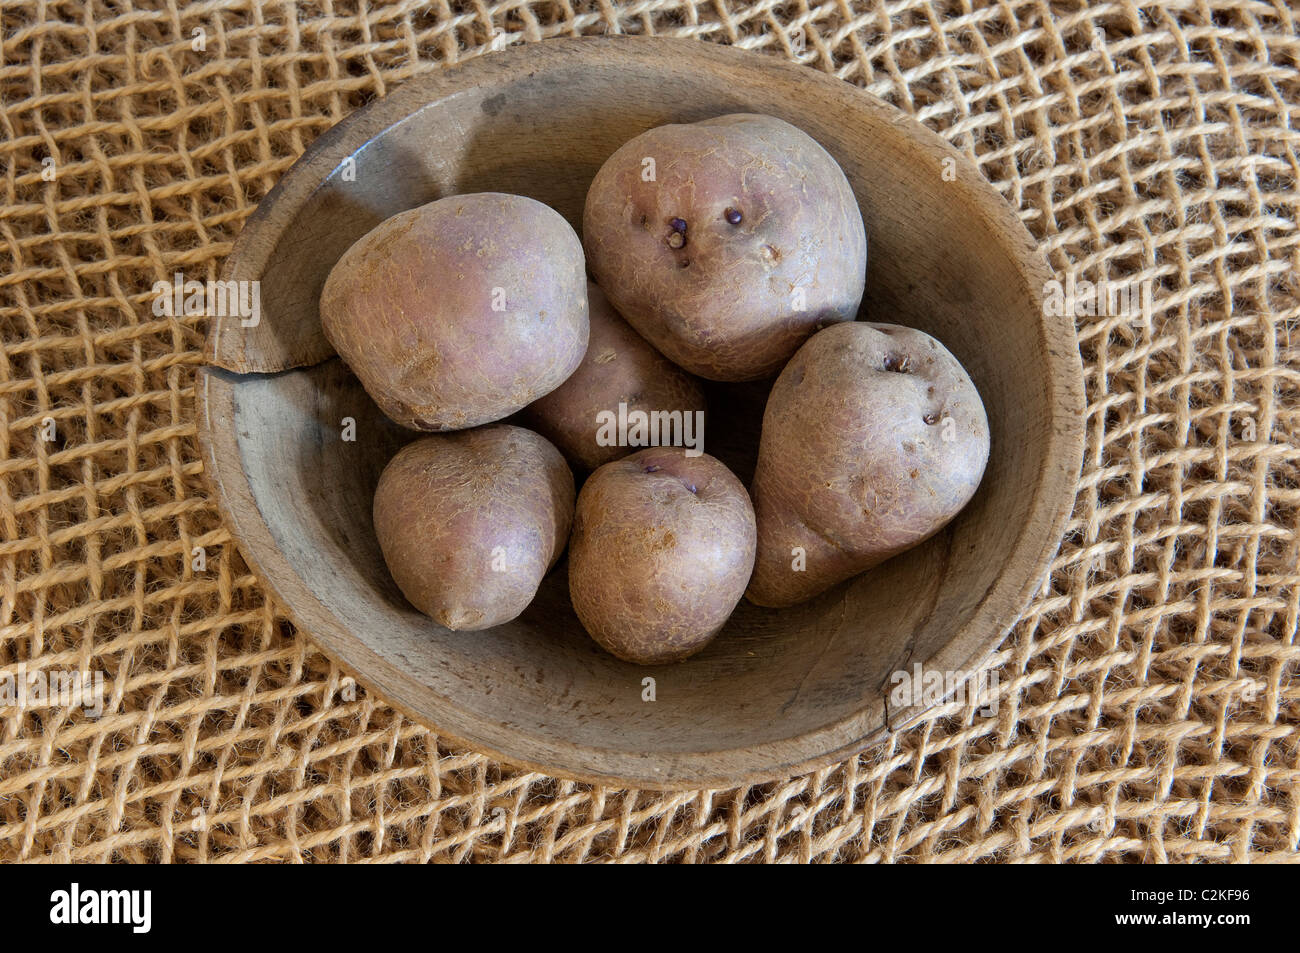 Potato (Solanum tuberosum), variety: Arran Victory. Potatoes in a wooden bowl. Stock Photo